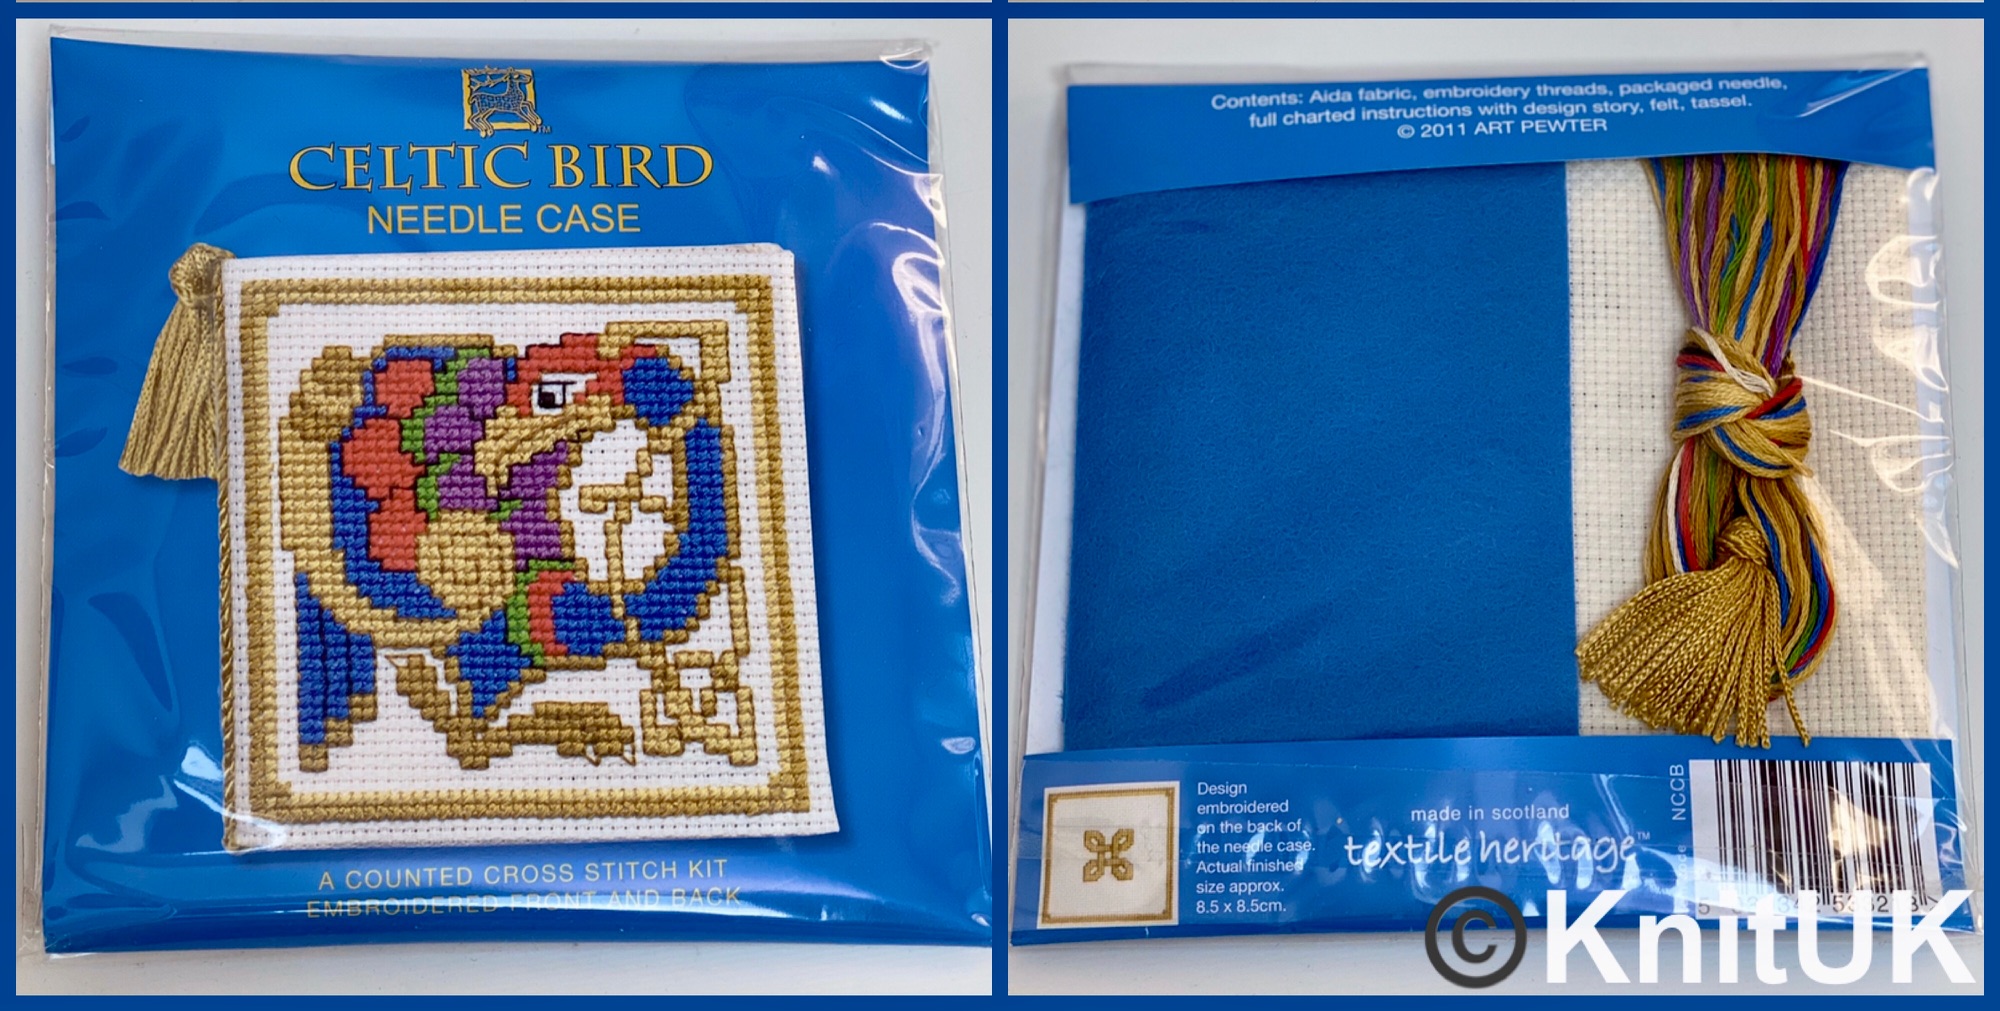 Textile Heritage Needle Case Celtic Bird cross stitch kit Made in Scotland